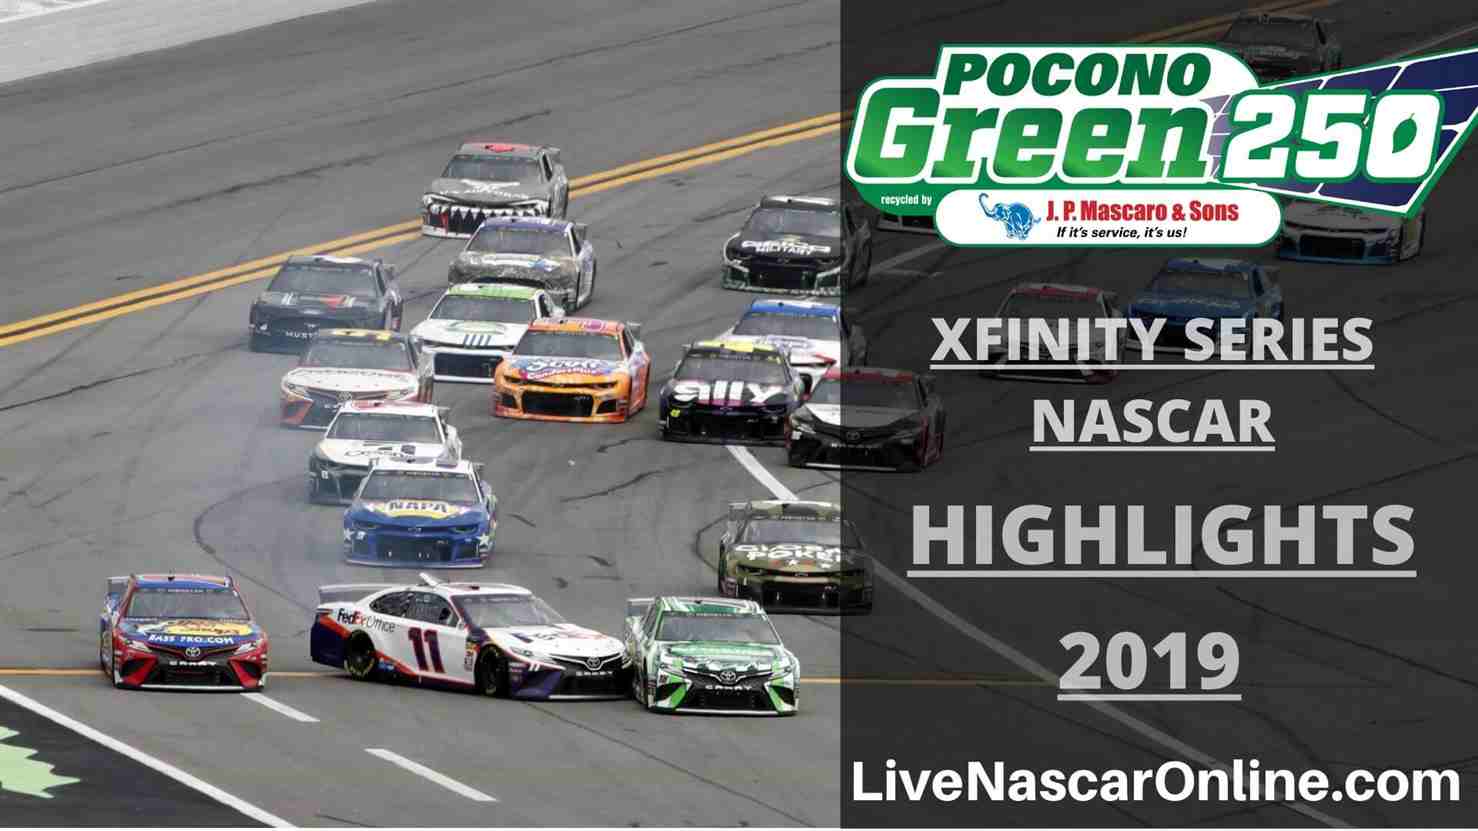 NASCAR Xfinity Series POCONO GREEN 250 Highlights 2019 Online